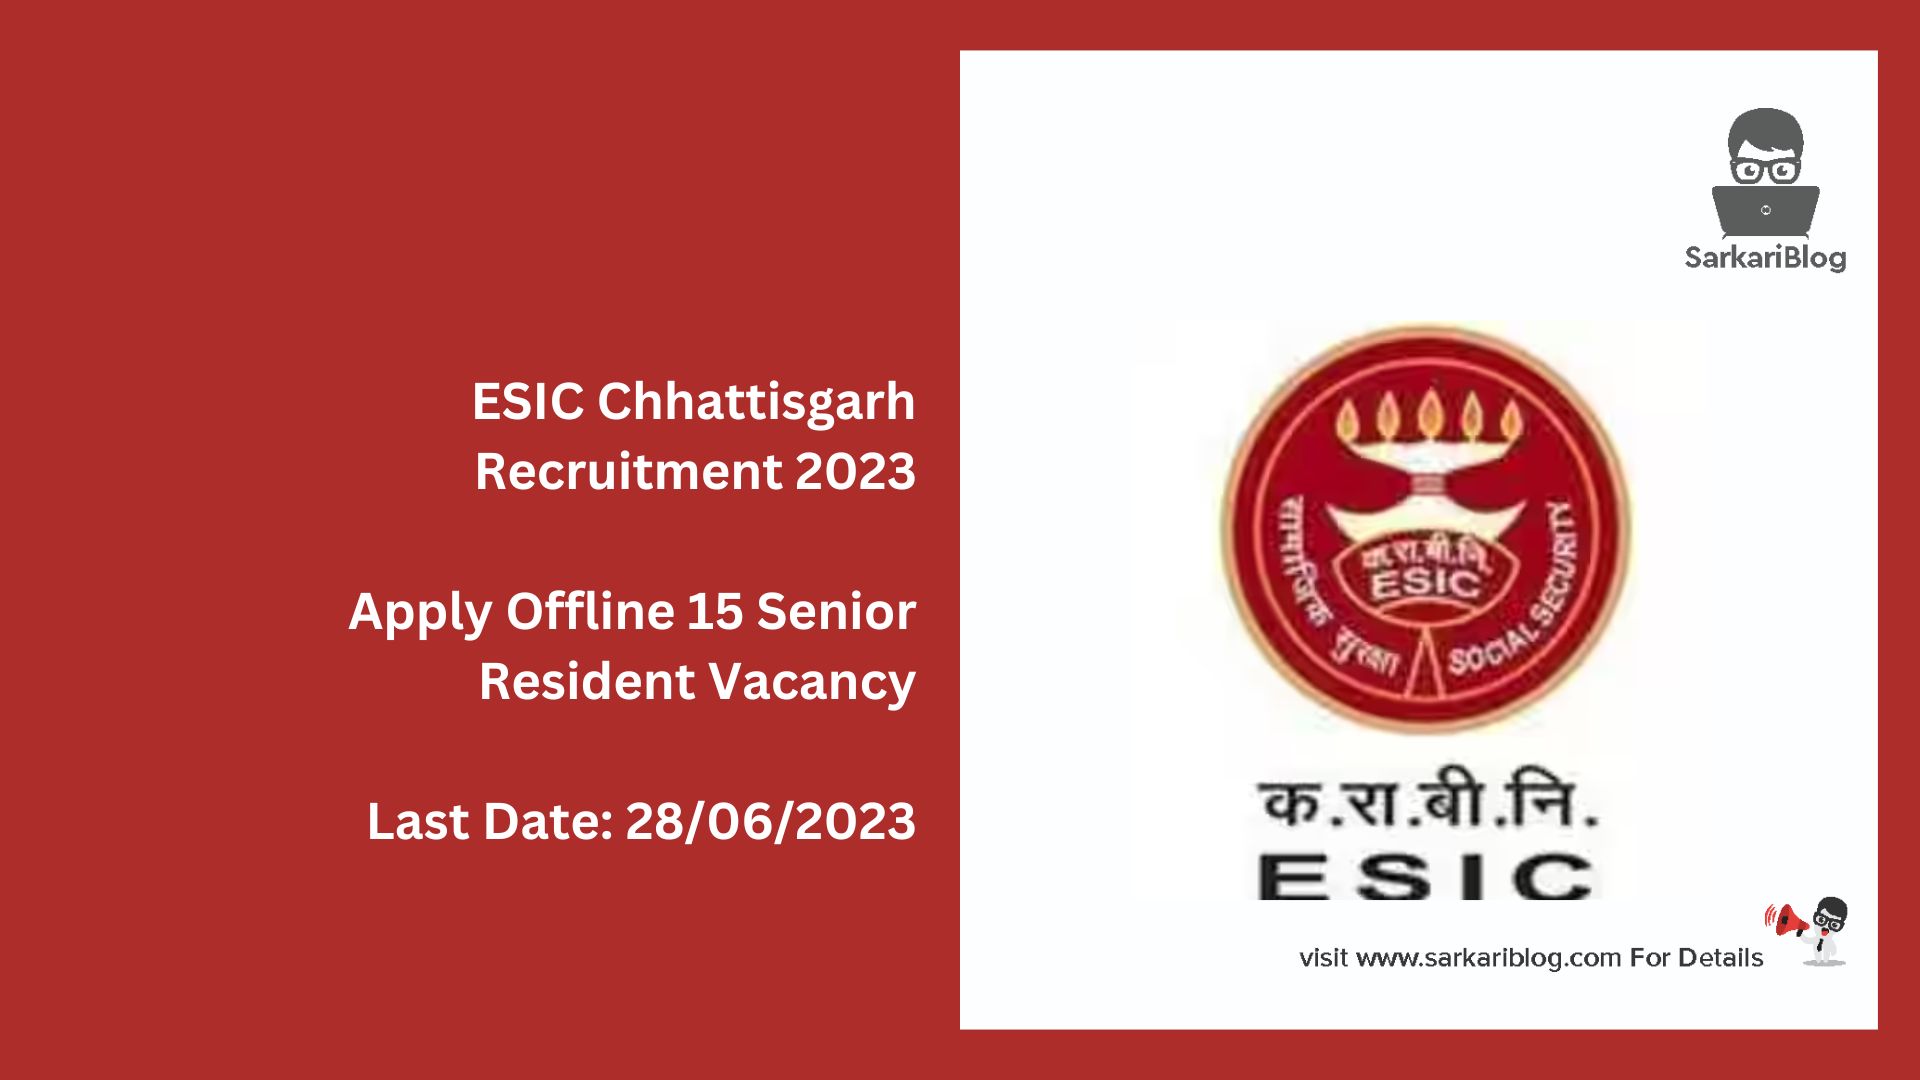 ESIC Chhattisgarh Recruitment 2023